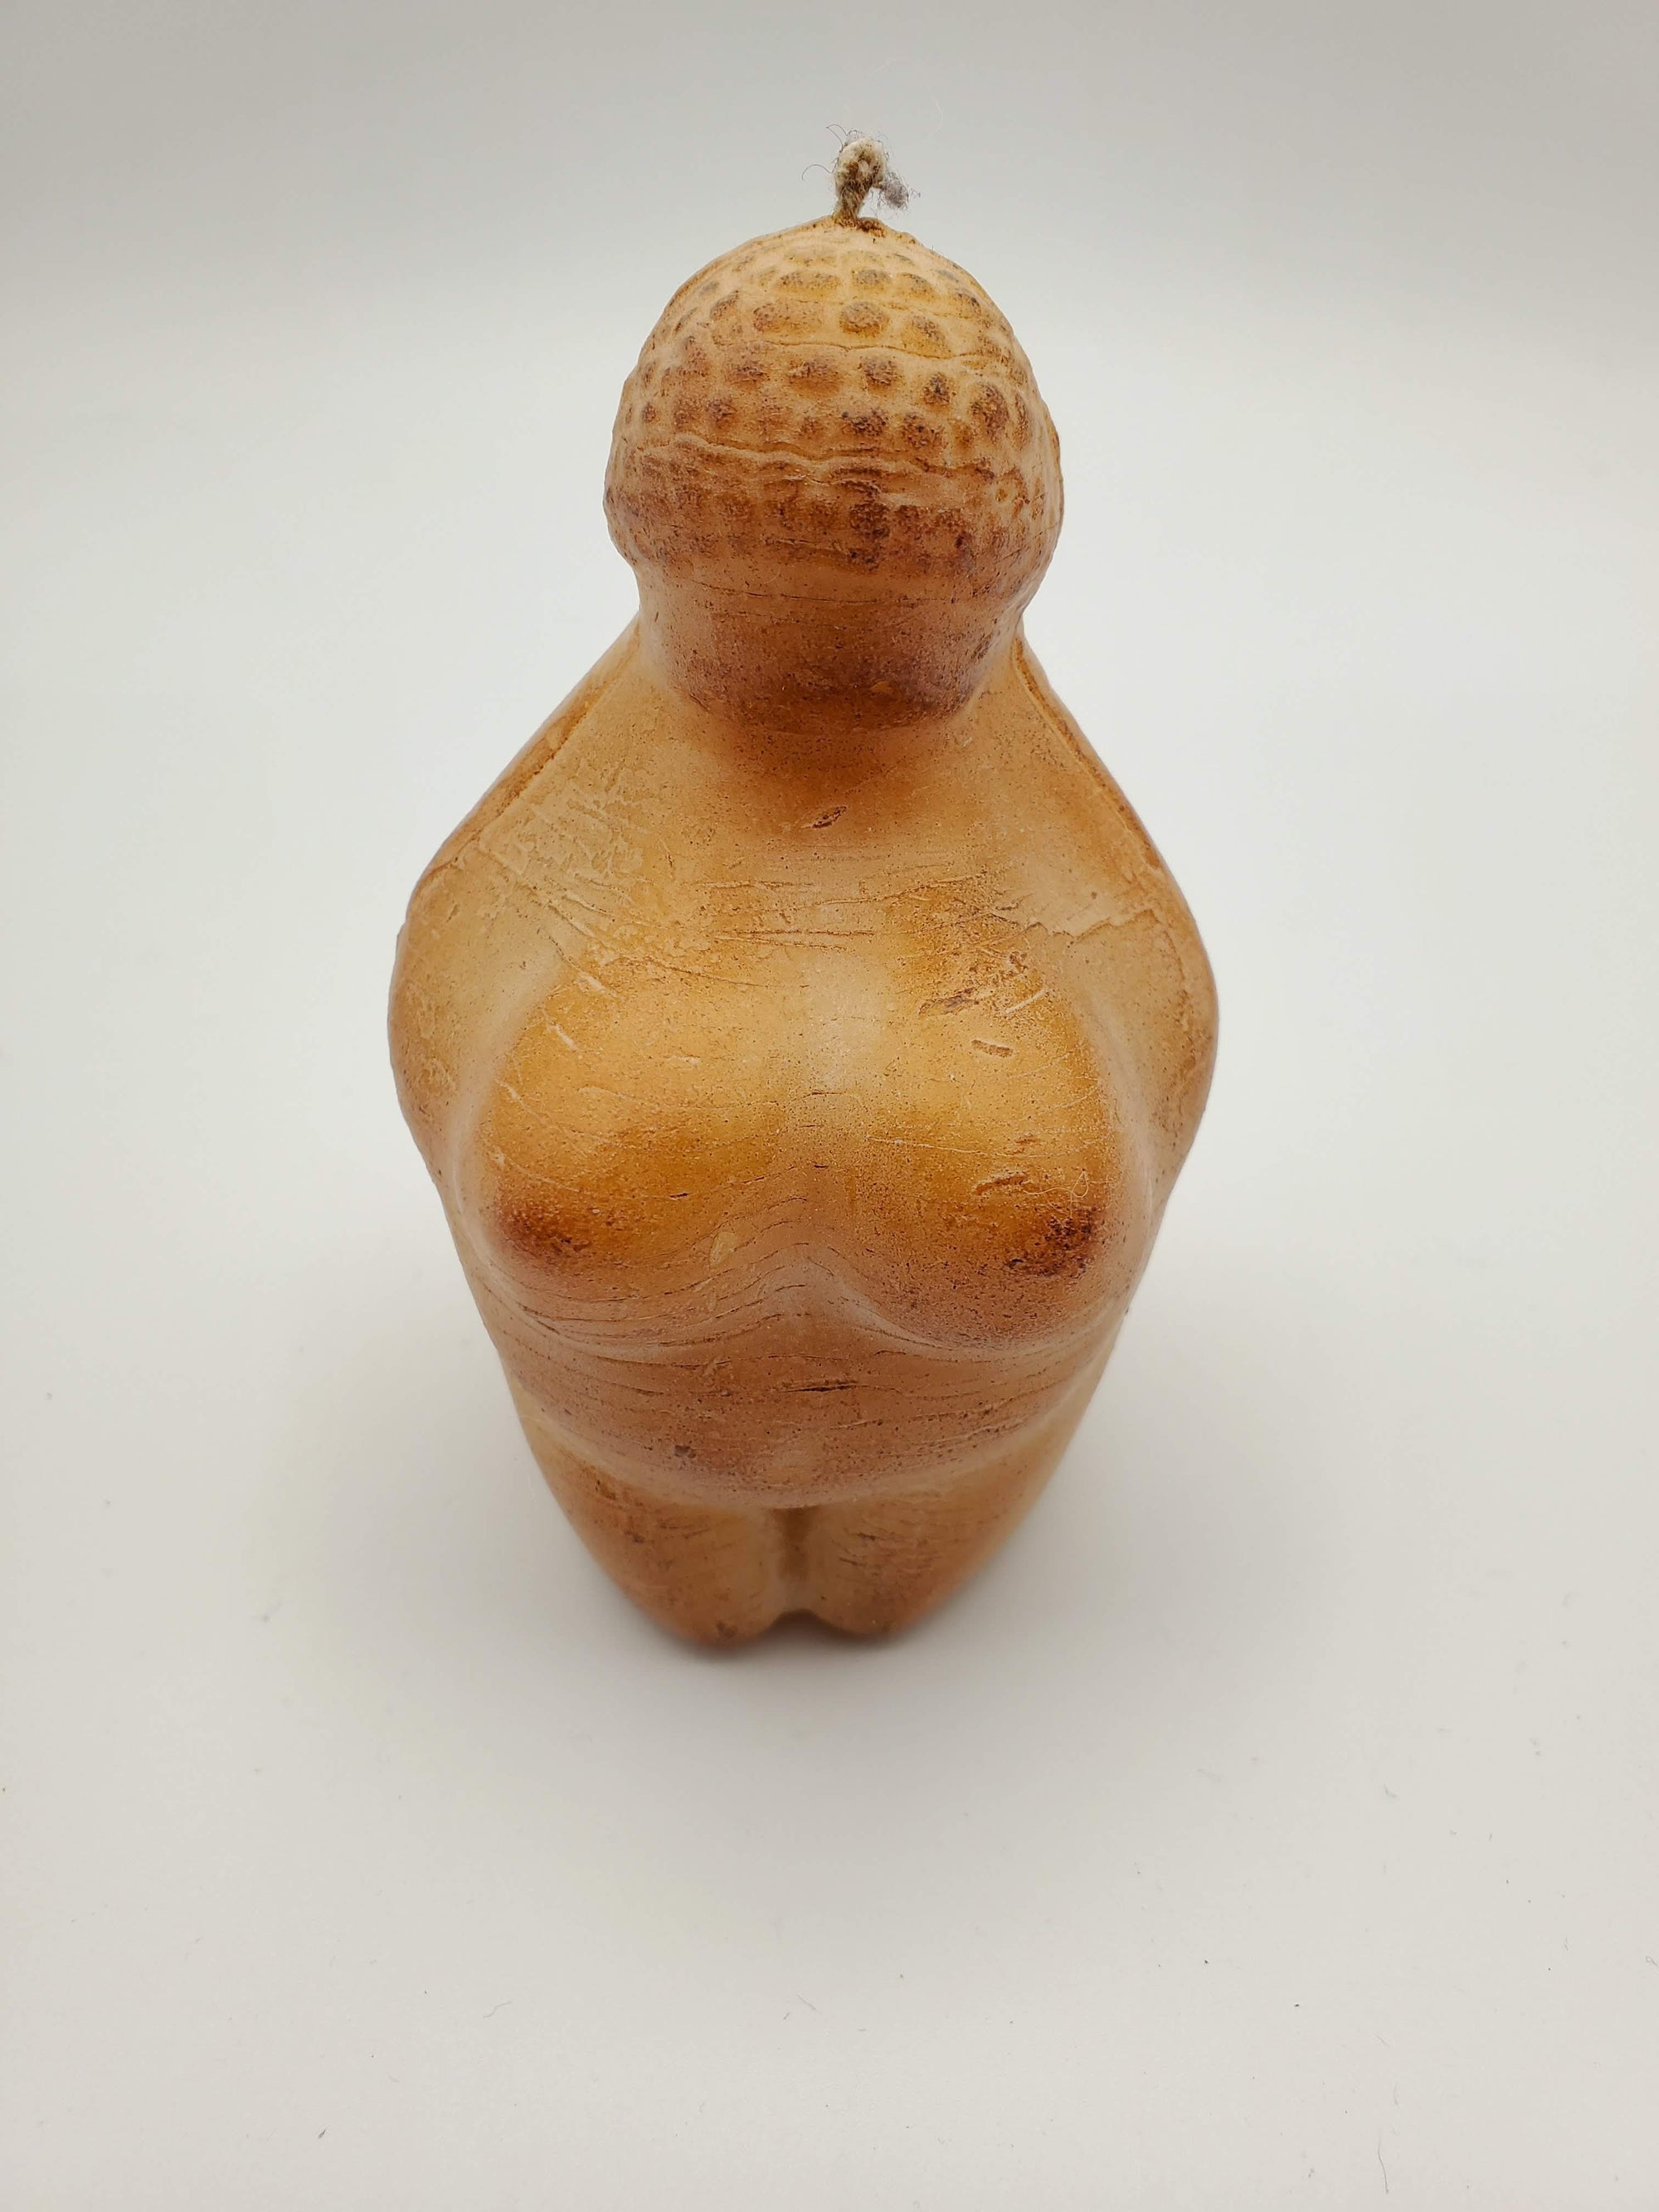 Beeswax Candles - Venus of Willendorf